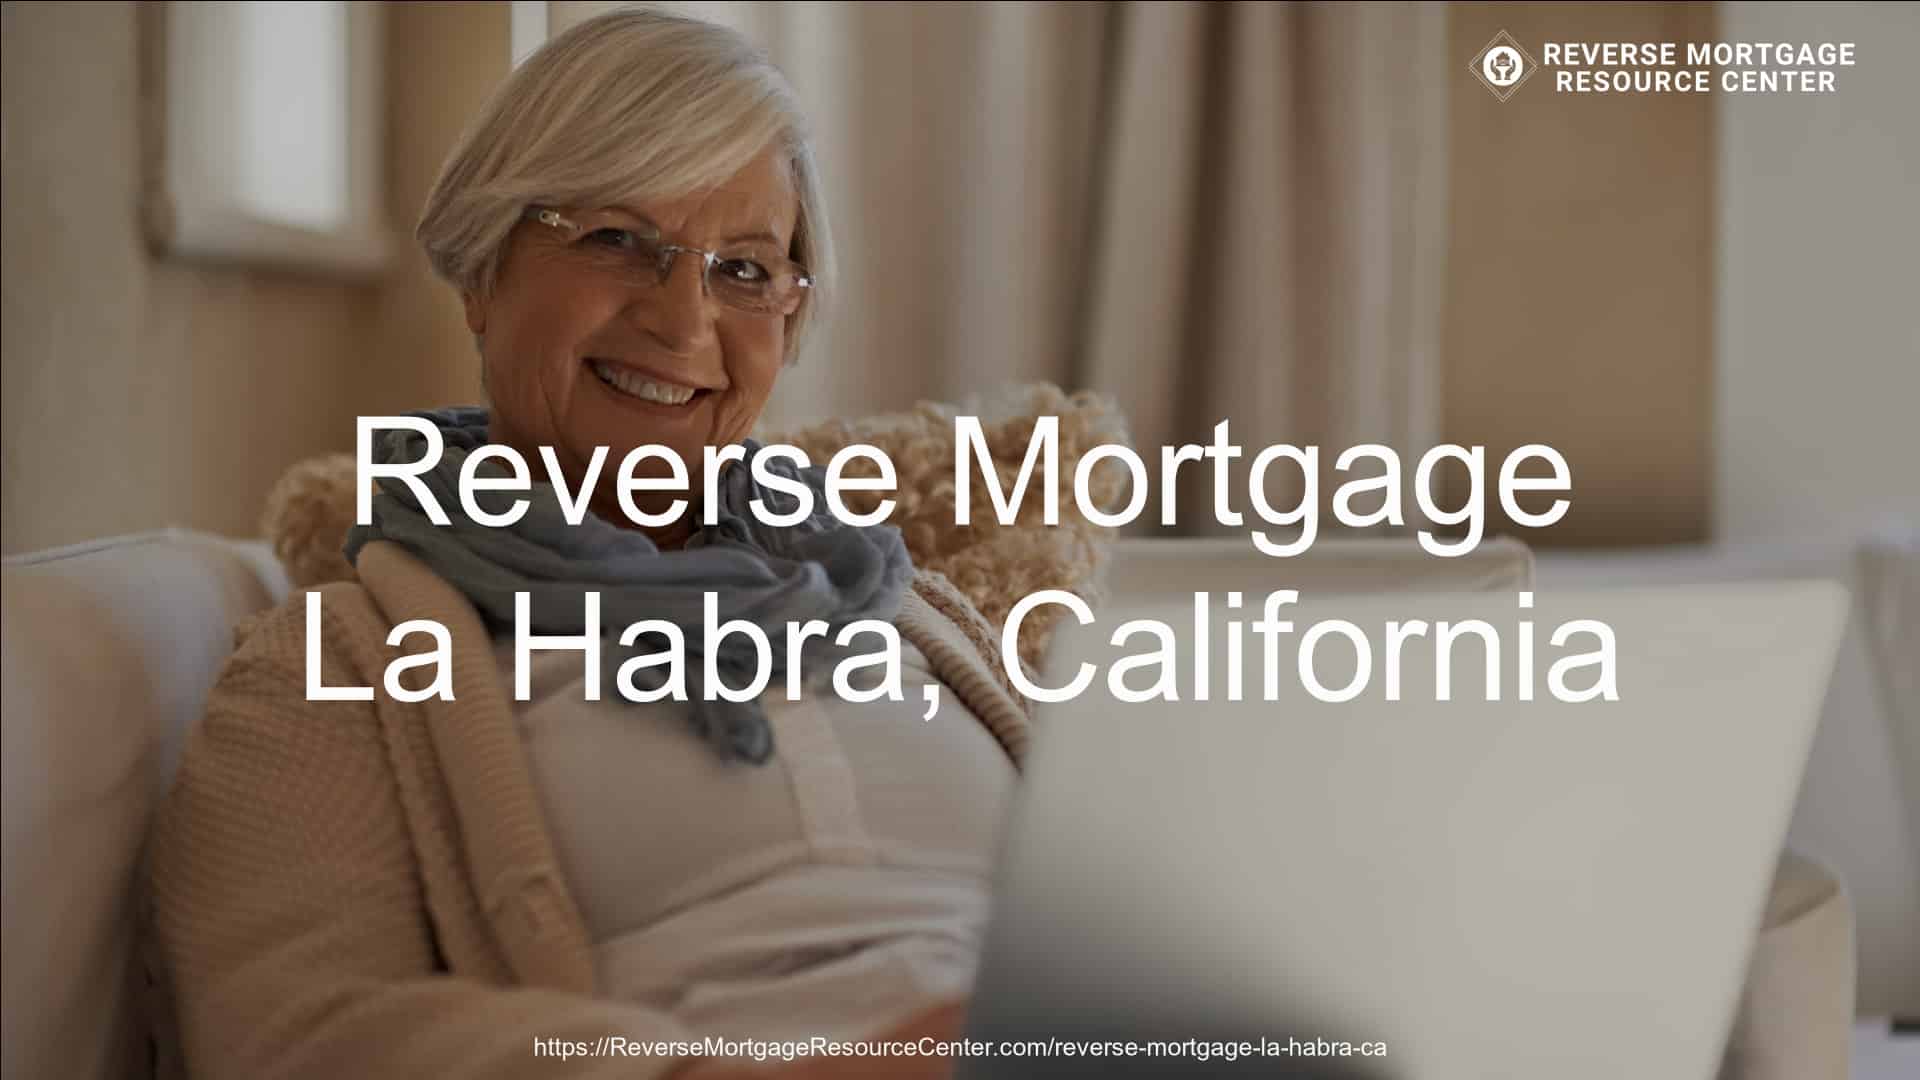 Reverse Mortgage Loans in La Habra California